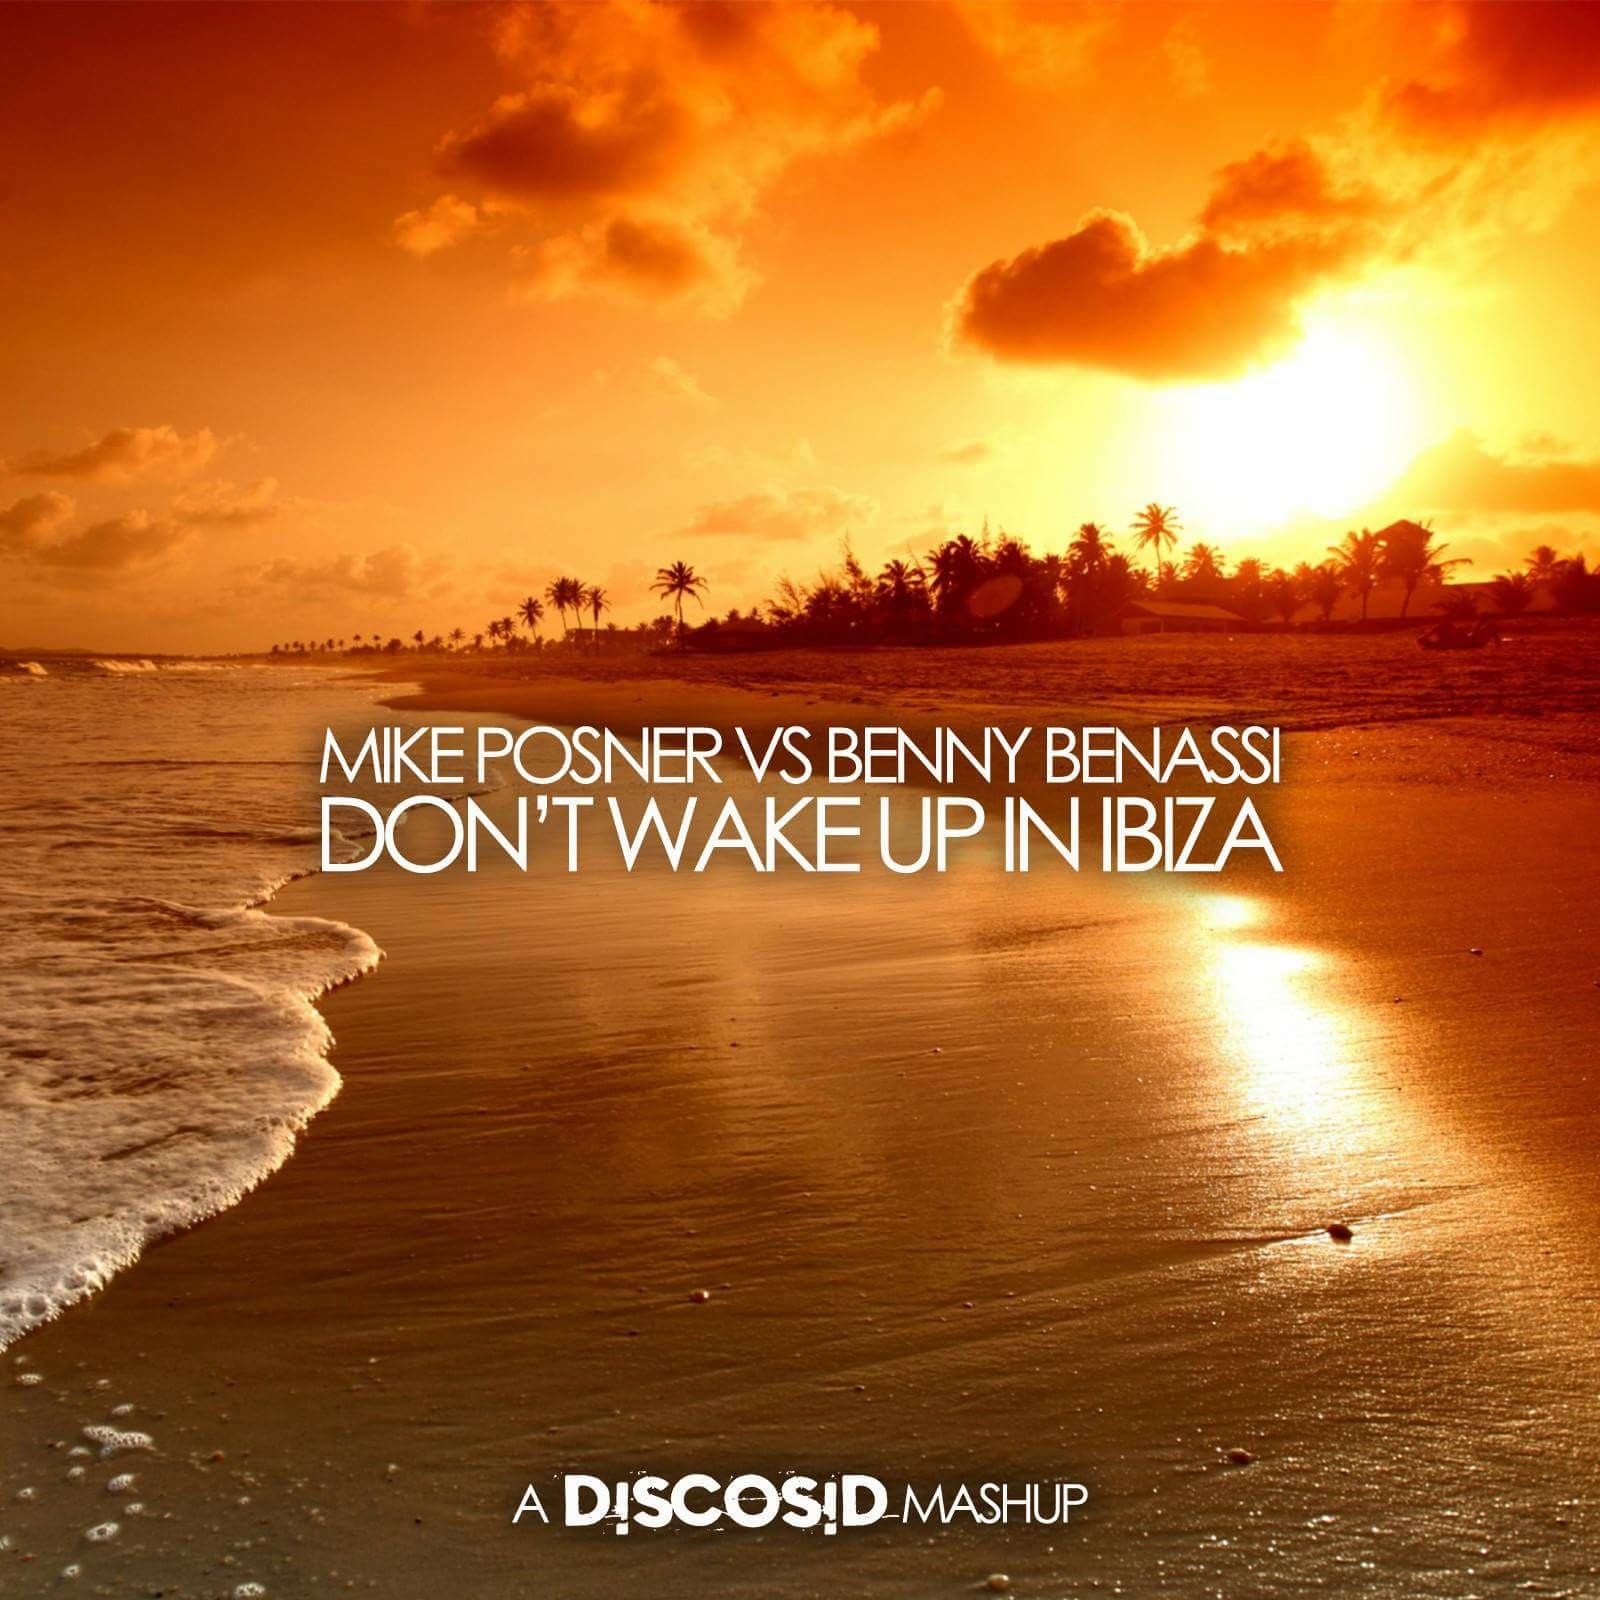 Mike Posner vs Benny Benassi - Don't Wake Me Up In Ibiza (Discosid Mashup) [VDJ Giles Barr Video Edit]